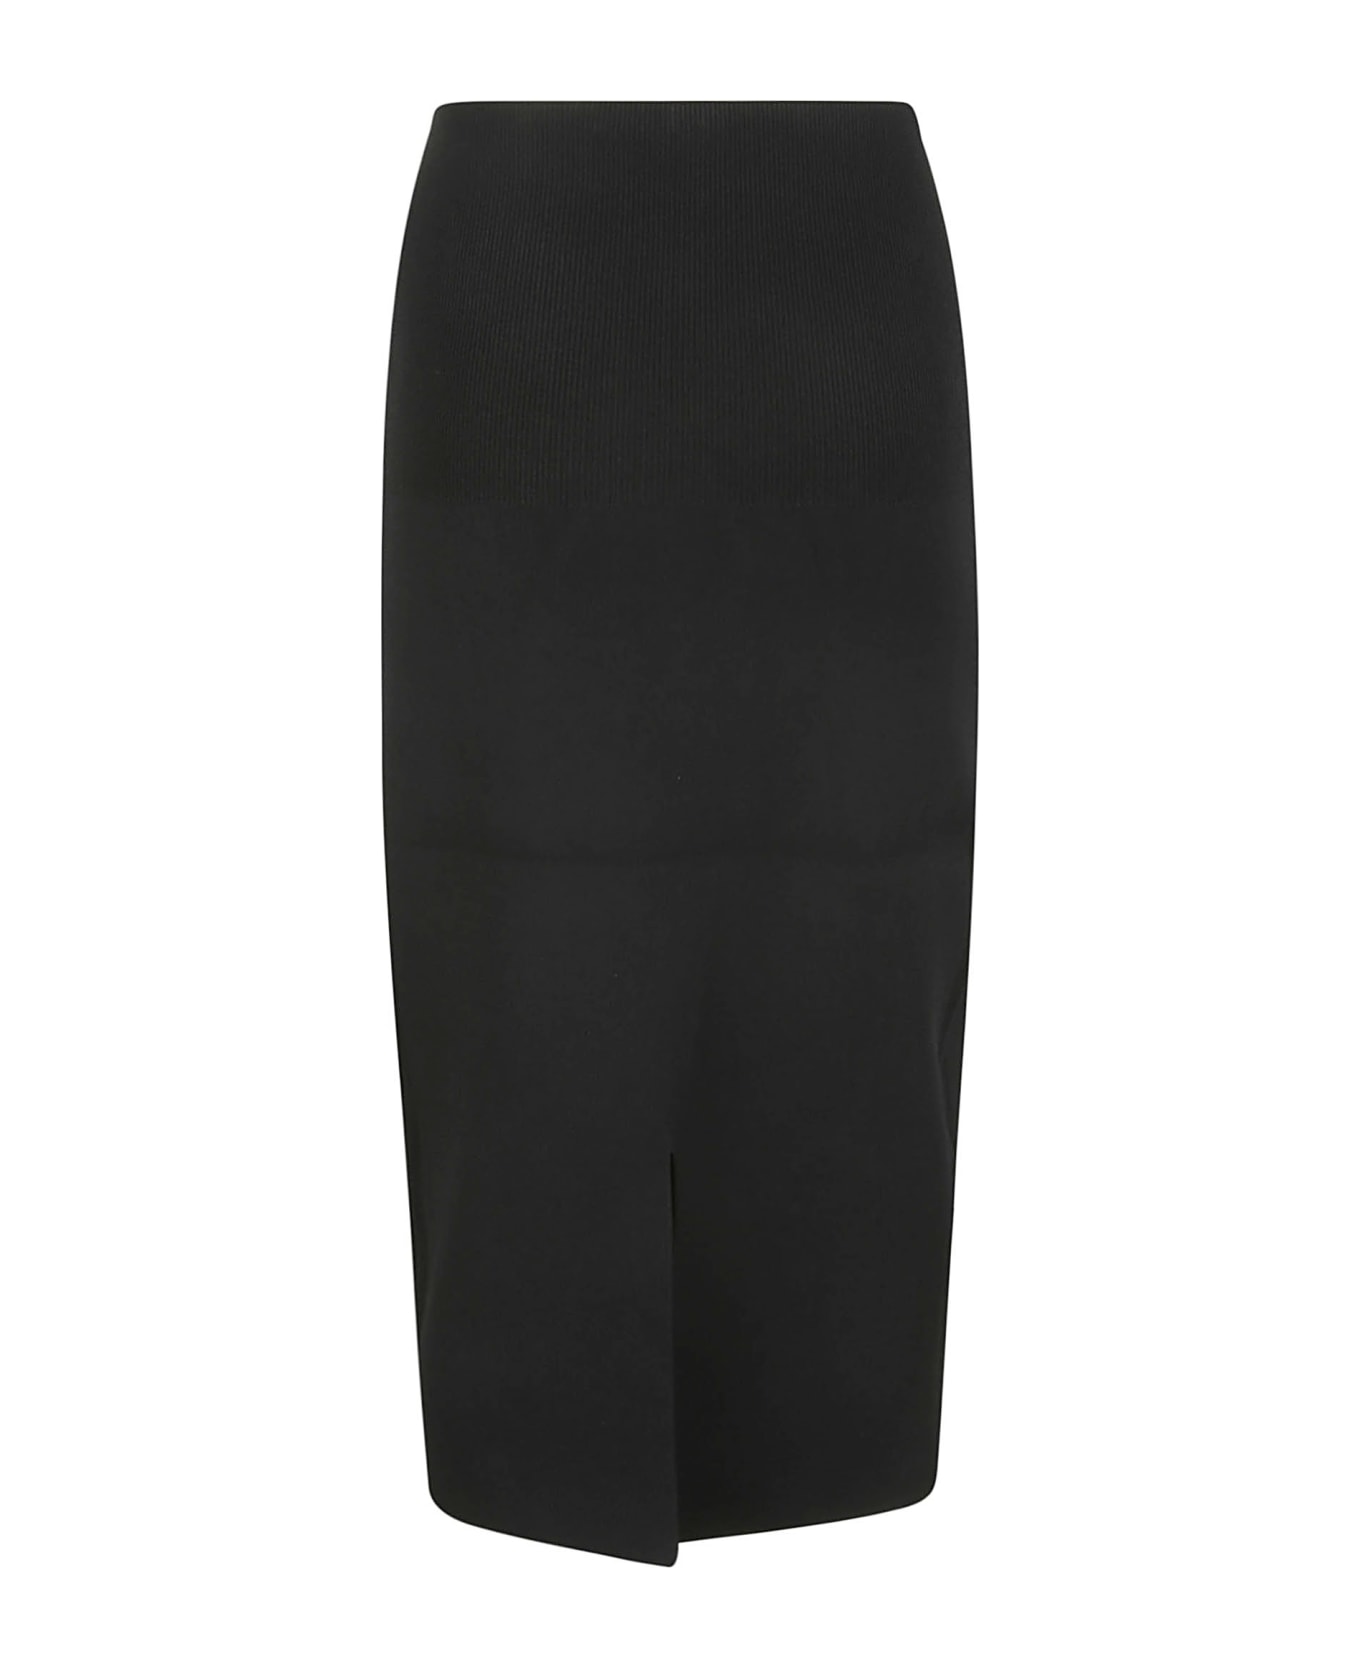 Victoria Beckham Fitted Skirt - 1